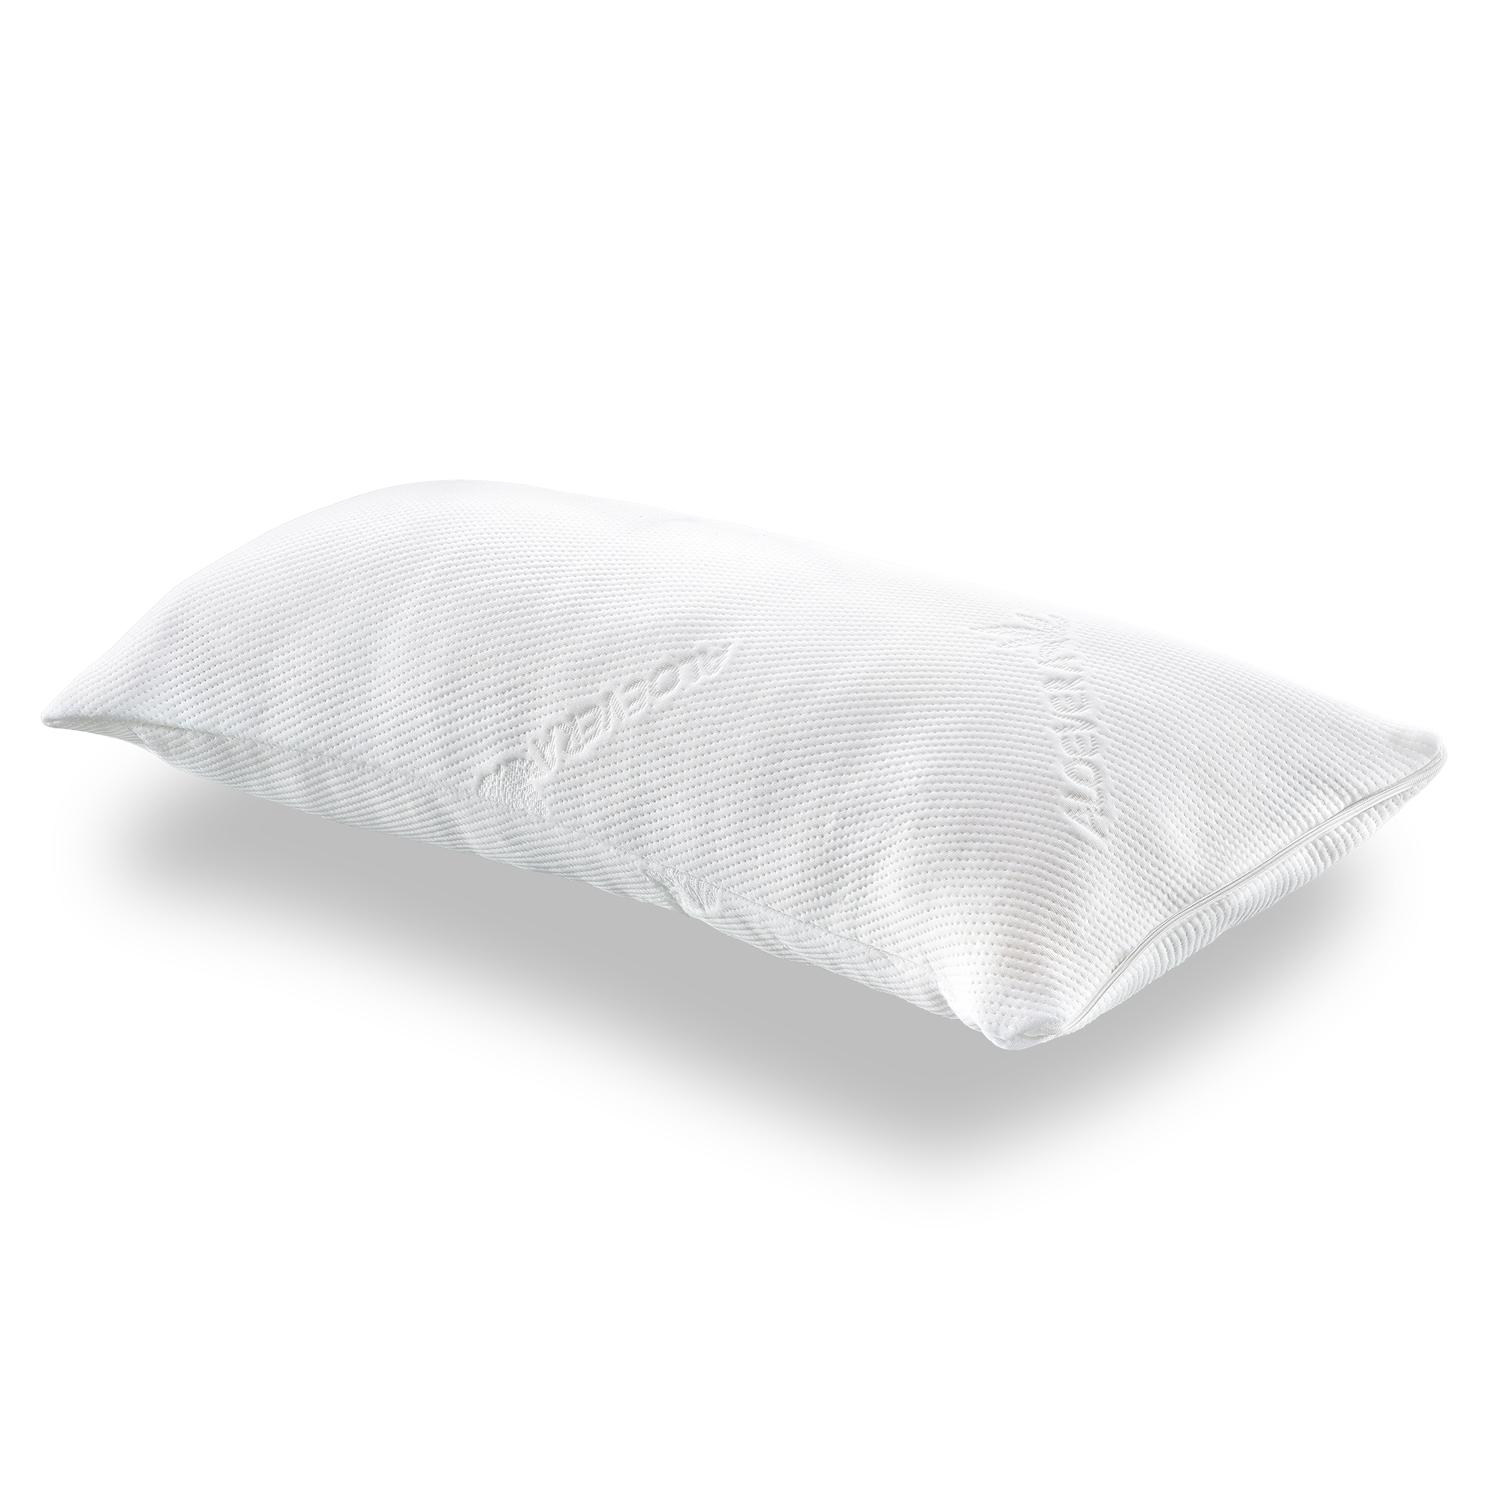 Cuscino per dormire viscoelastico CloudComfort 40 x 80 cm